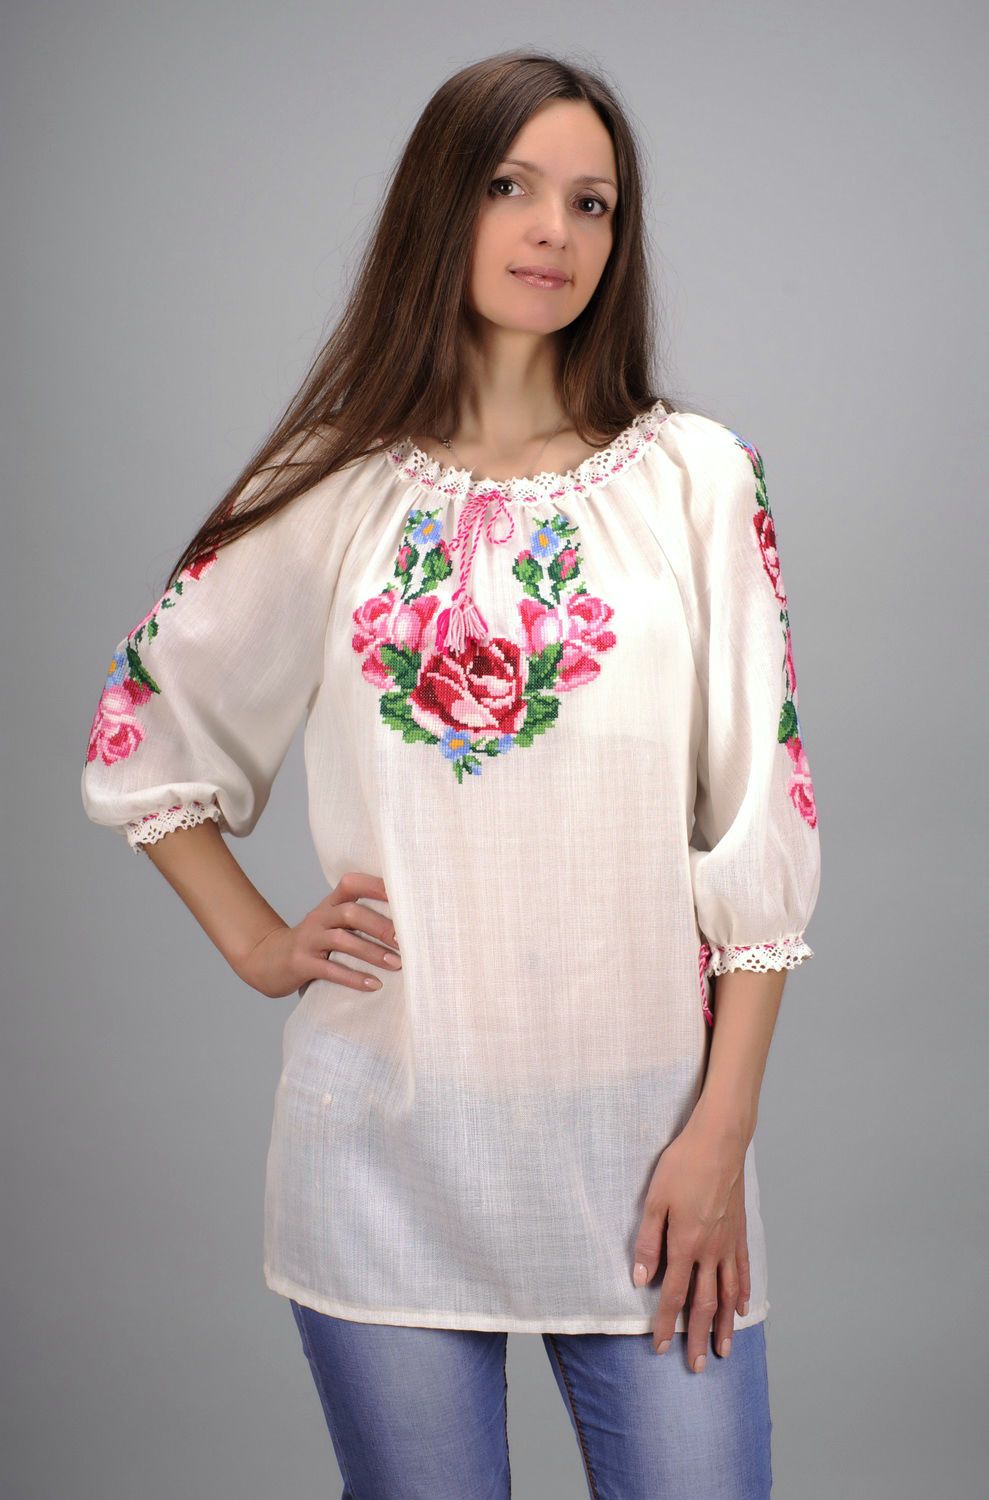 Chemise femme brodée ethnique ukrainienne Vychyvanka avec roses photo 1